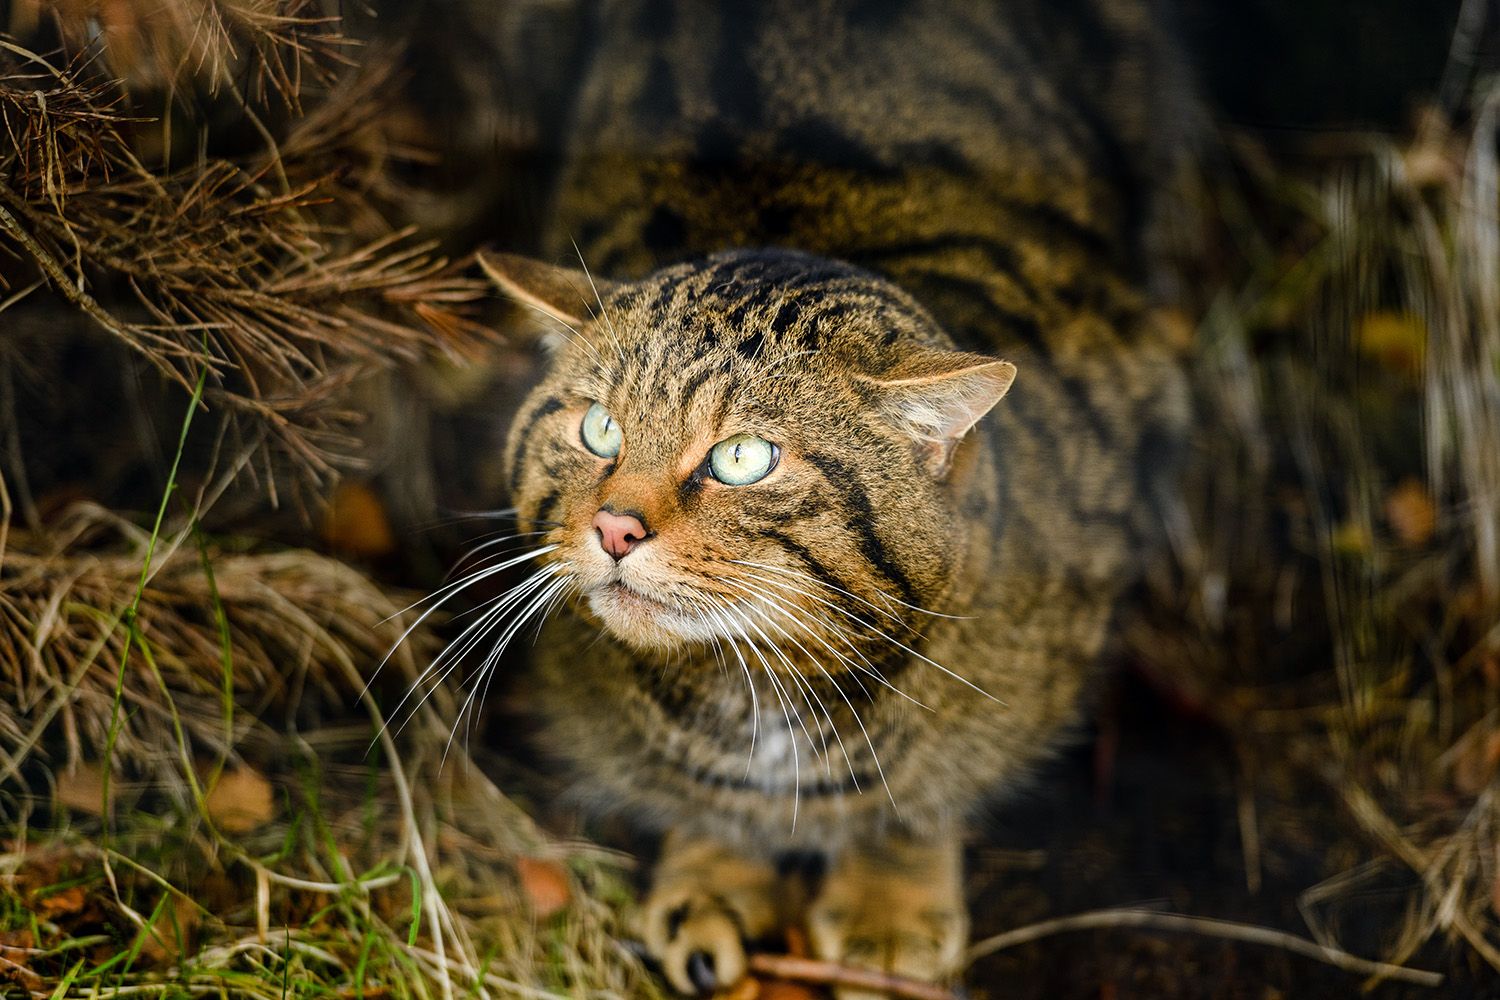 A Scottish wildcat